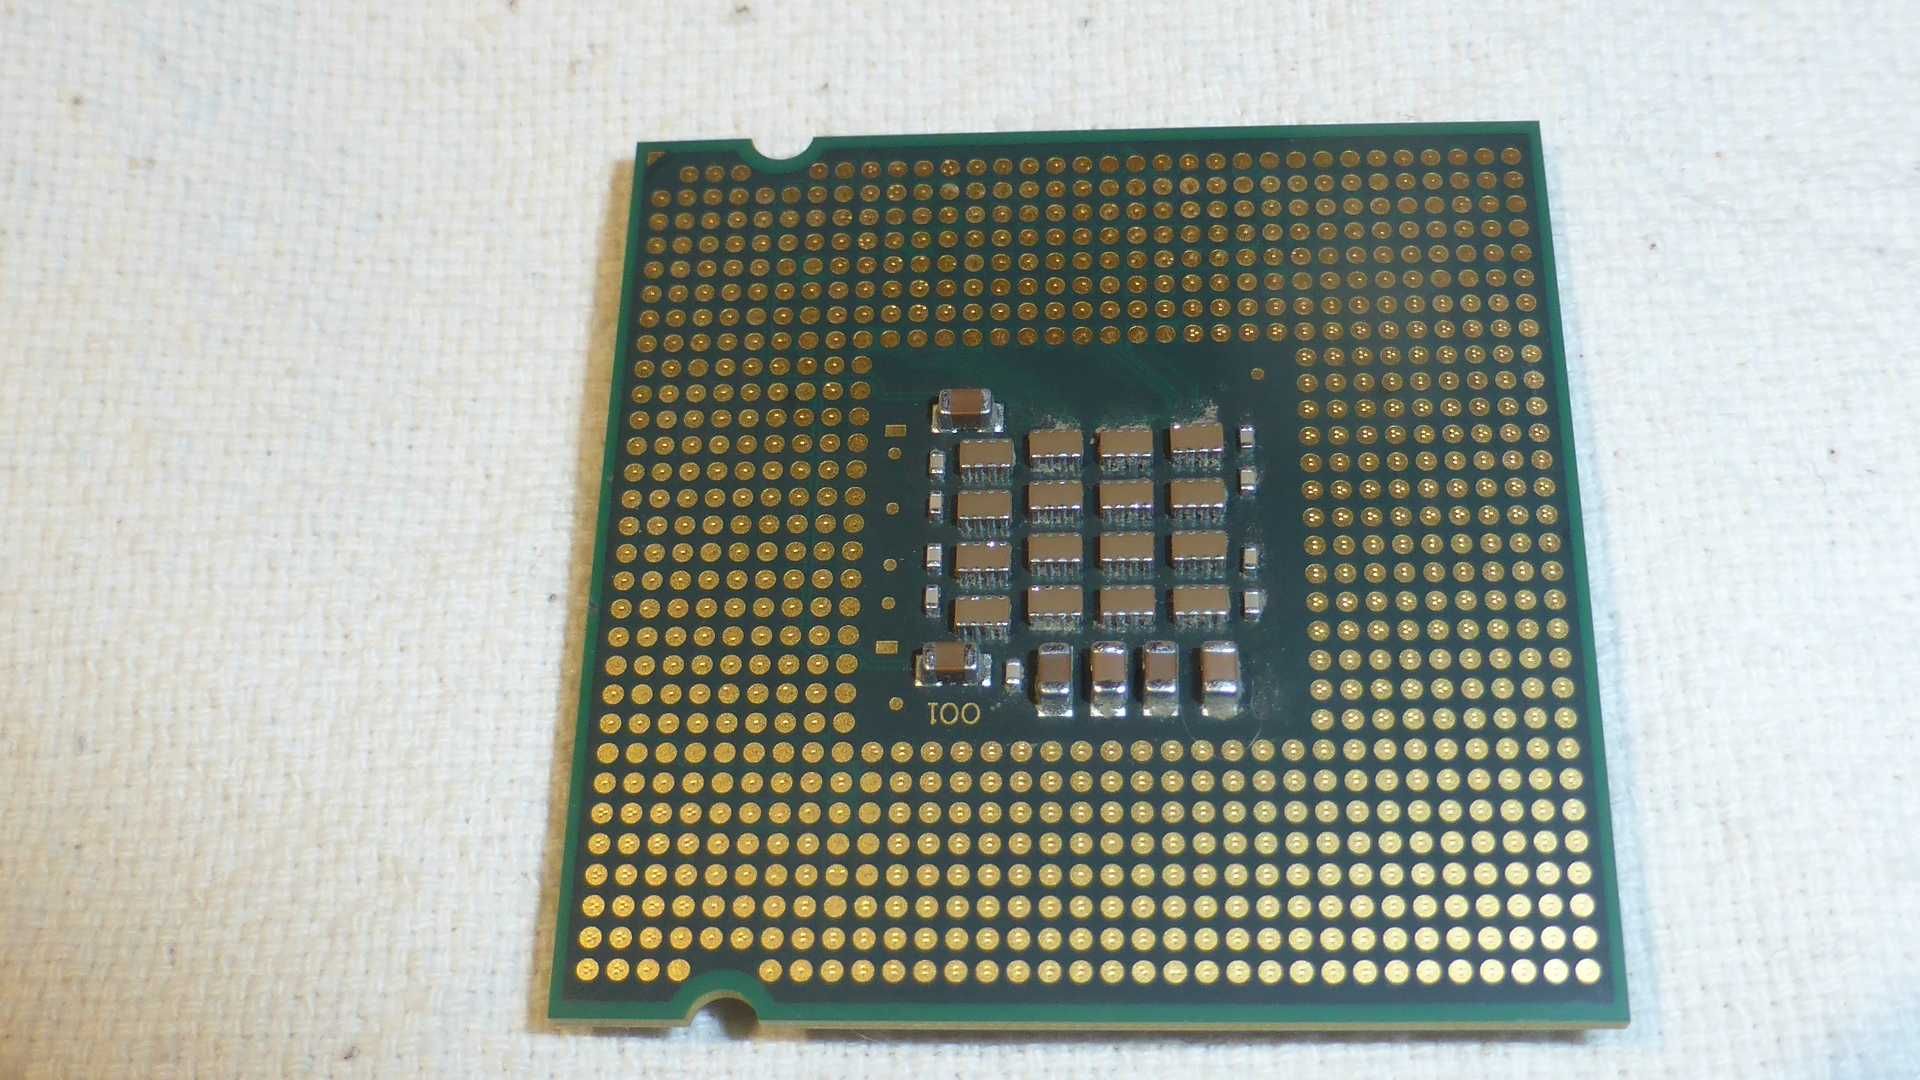 CPU Intel Pentium 4, socket 775